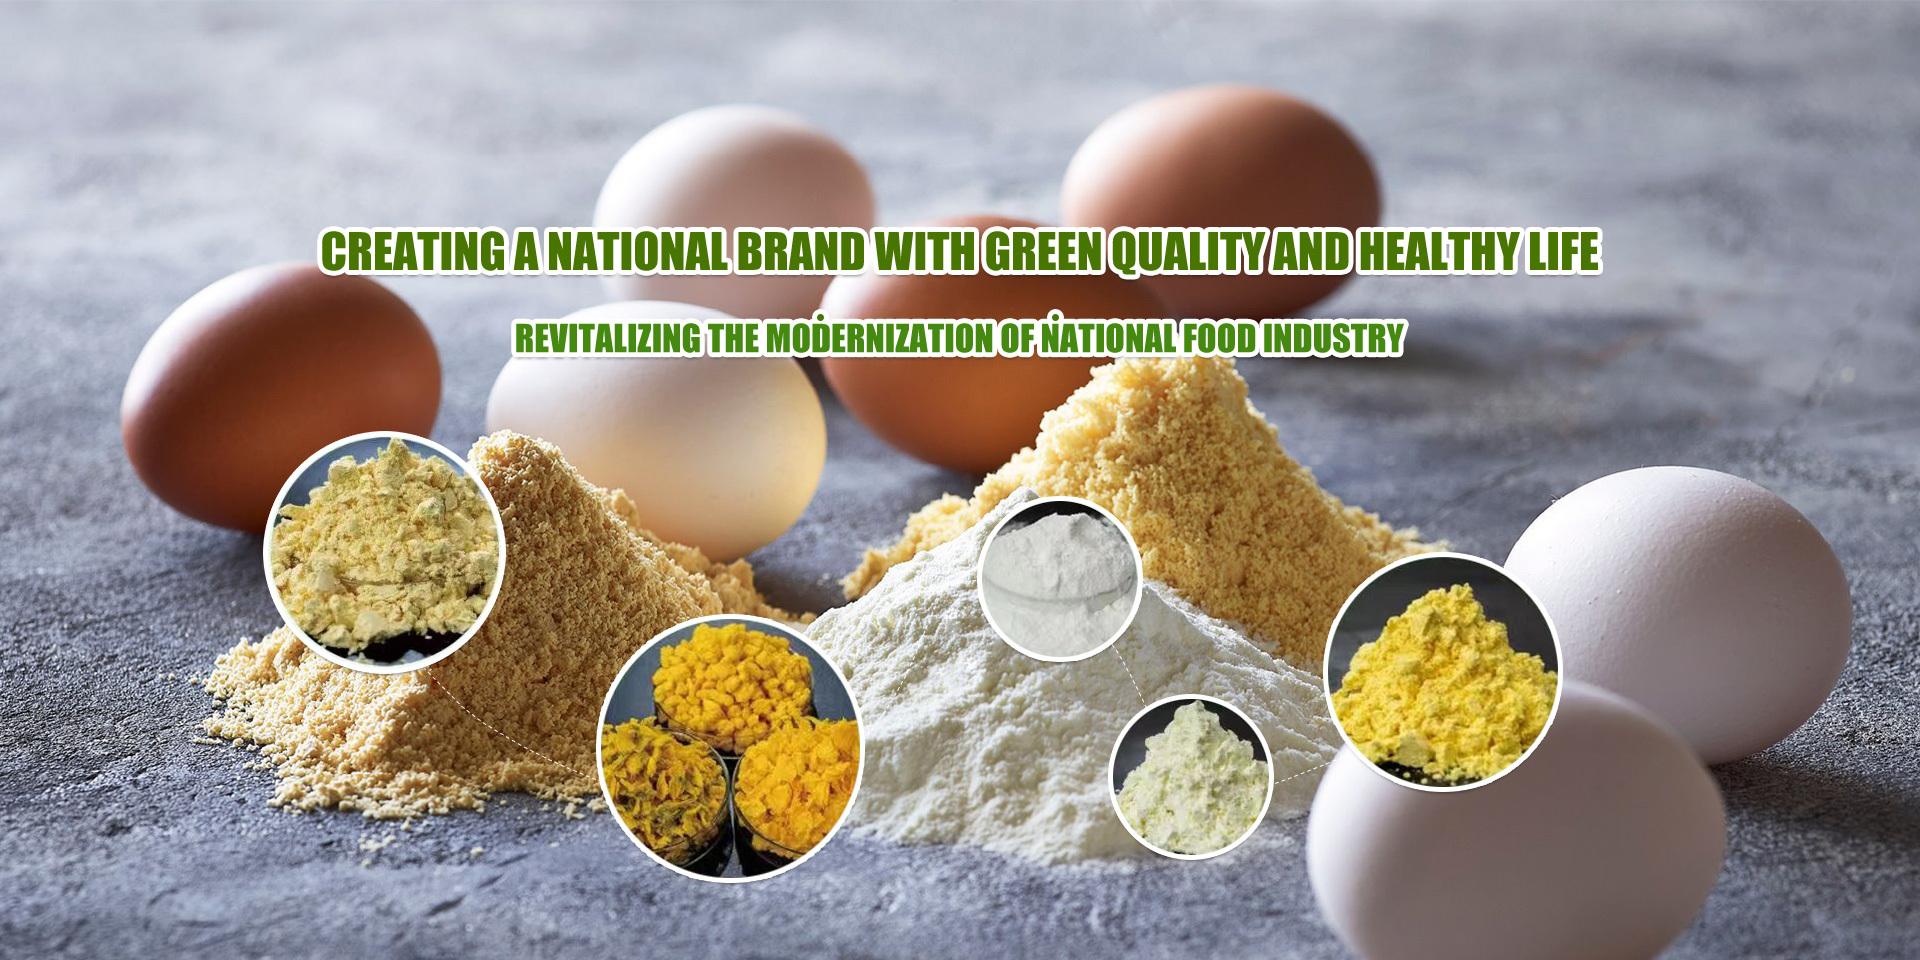 Revitalizing the Modernization of National Food Industry